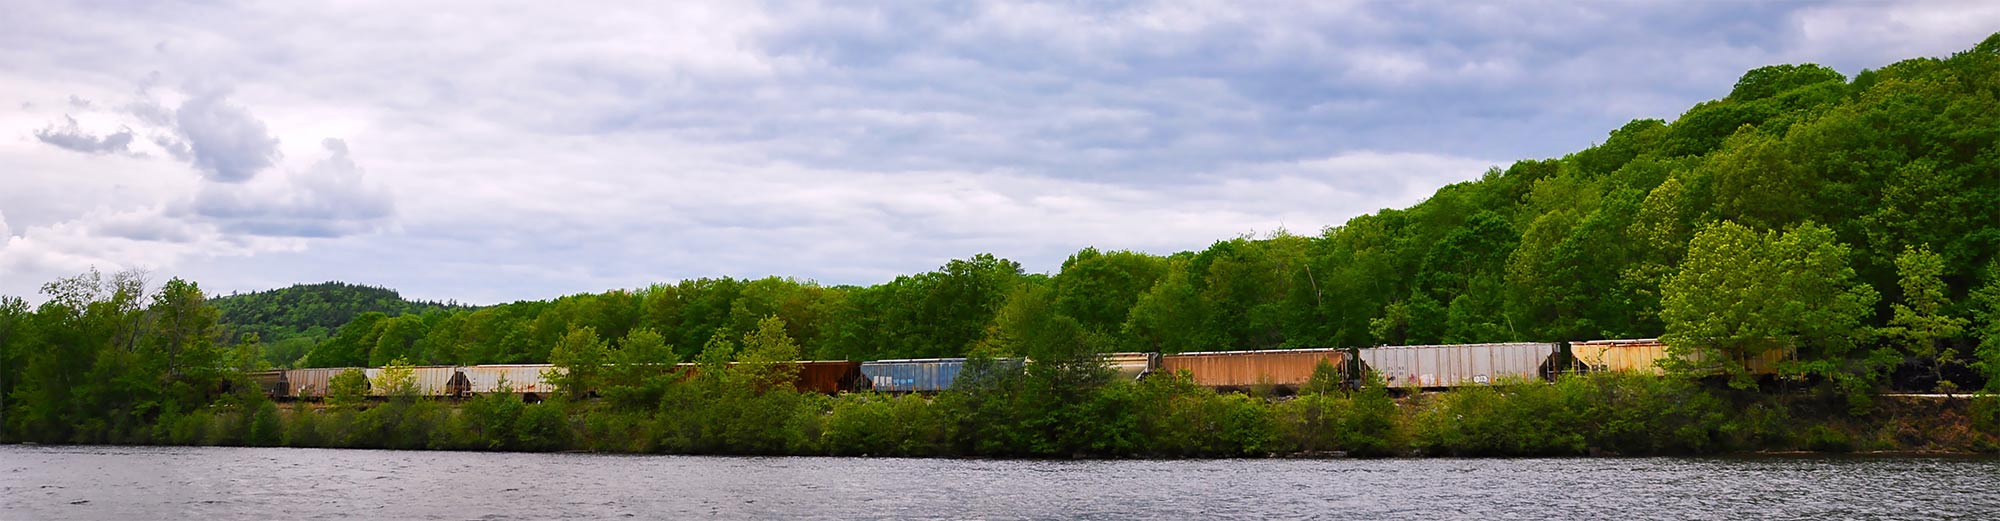 A freight train rolls alongside a river bank